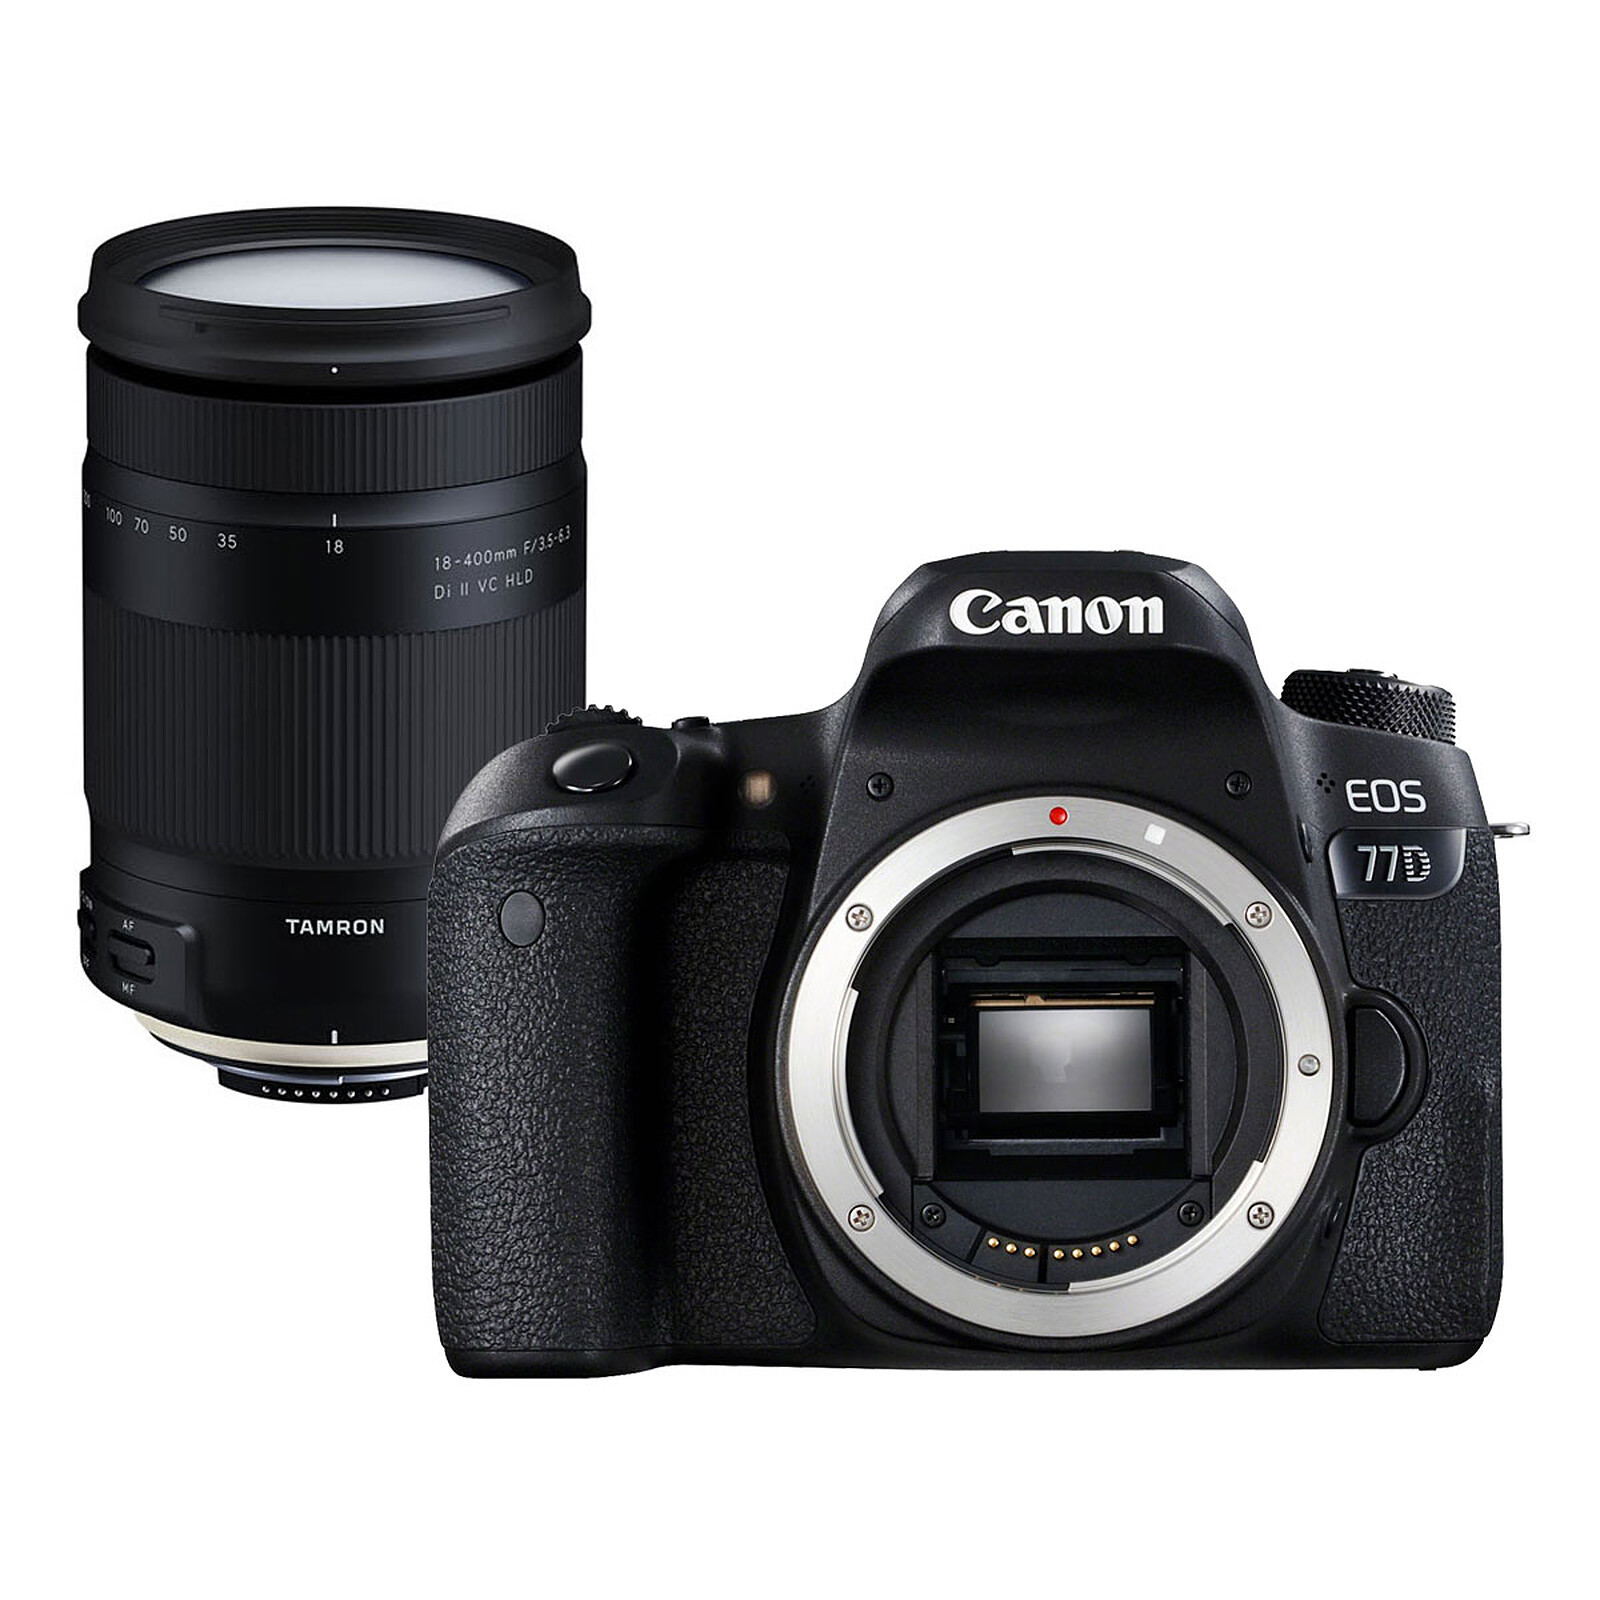 Canon EOS 77D + Tamron 18-400mm f/3.5-6.3 Di II VC HLD